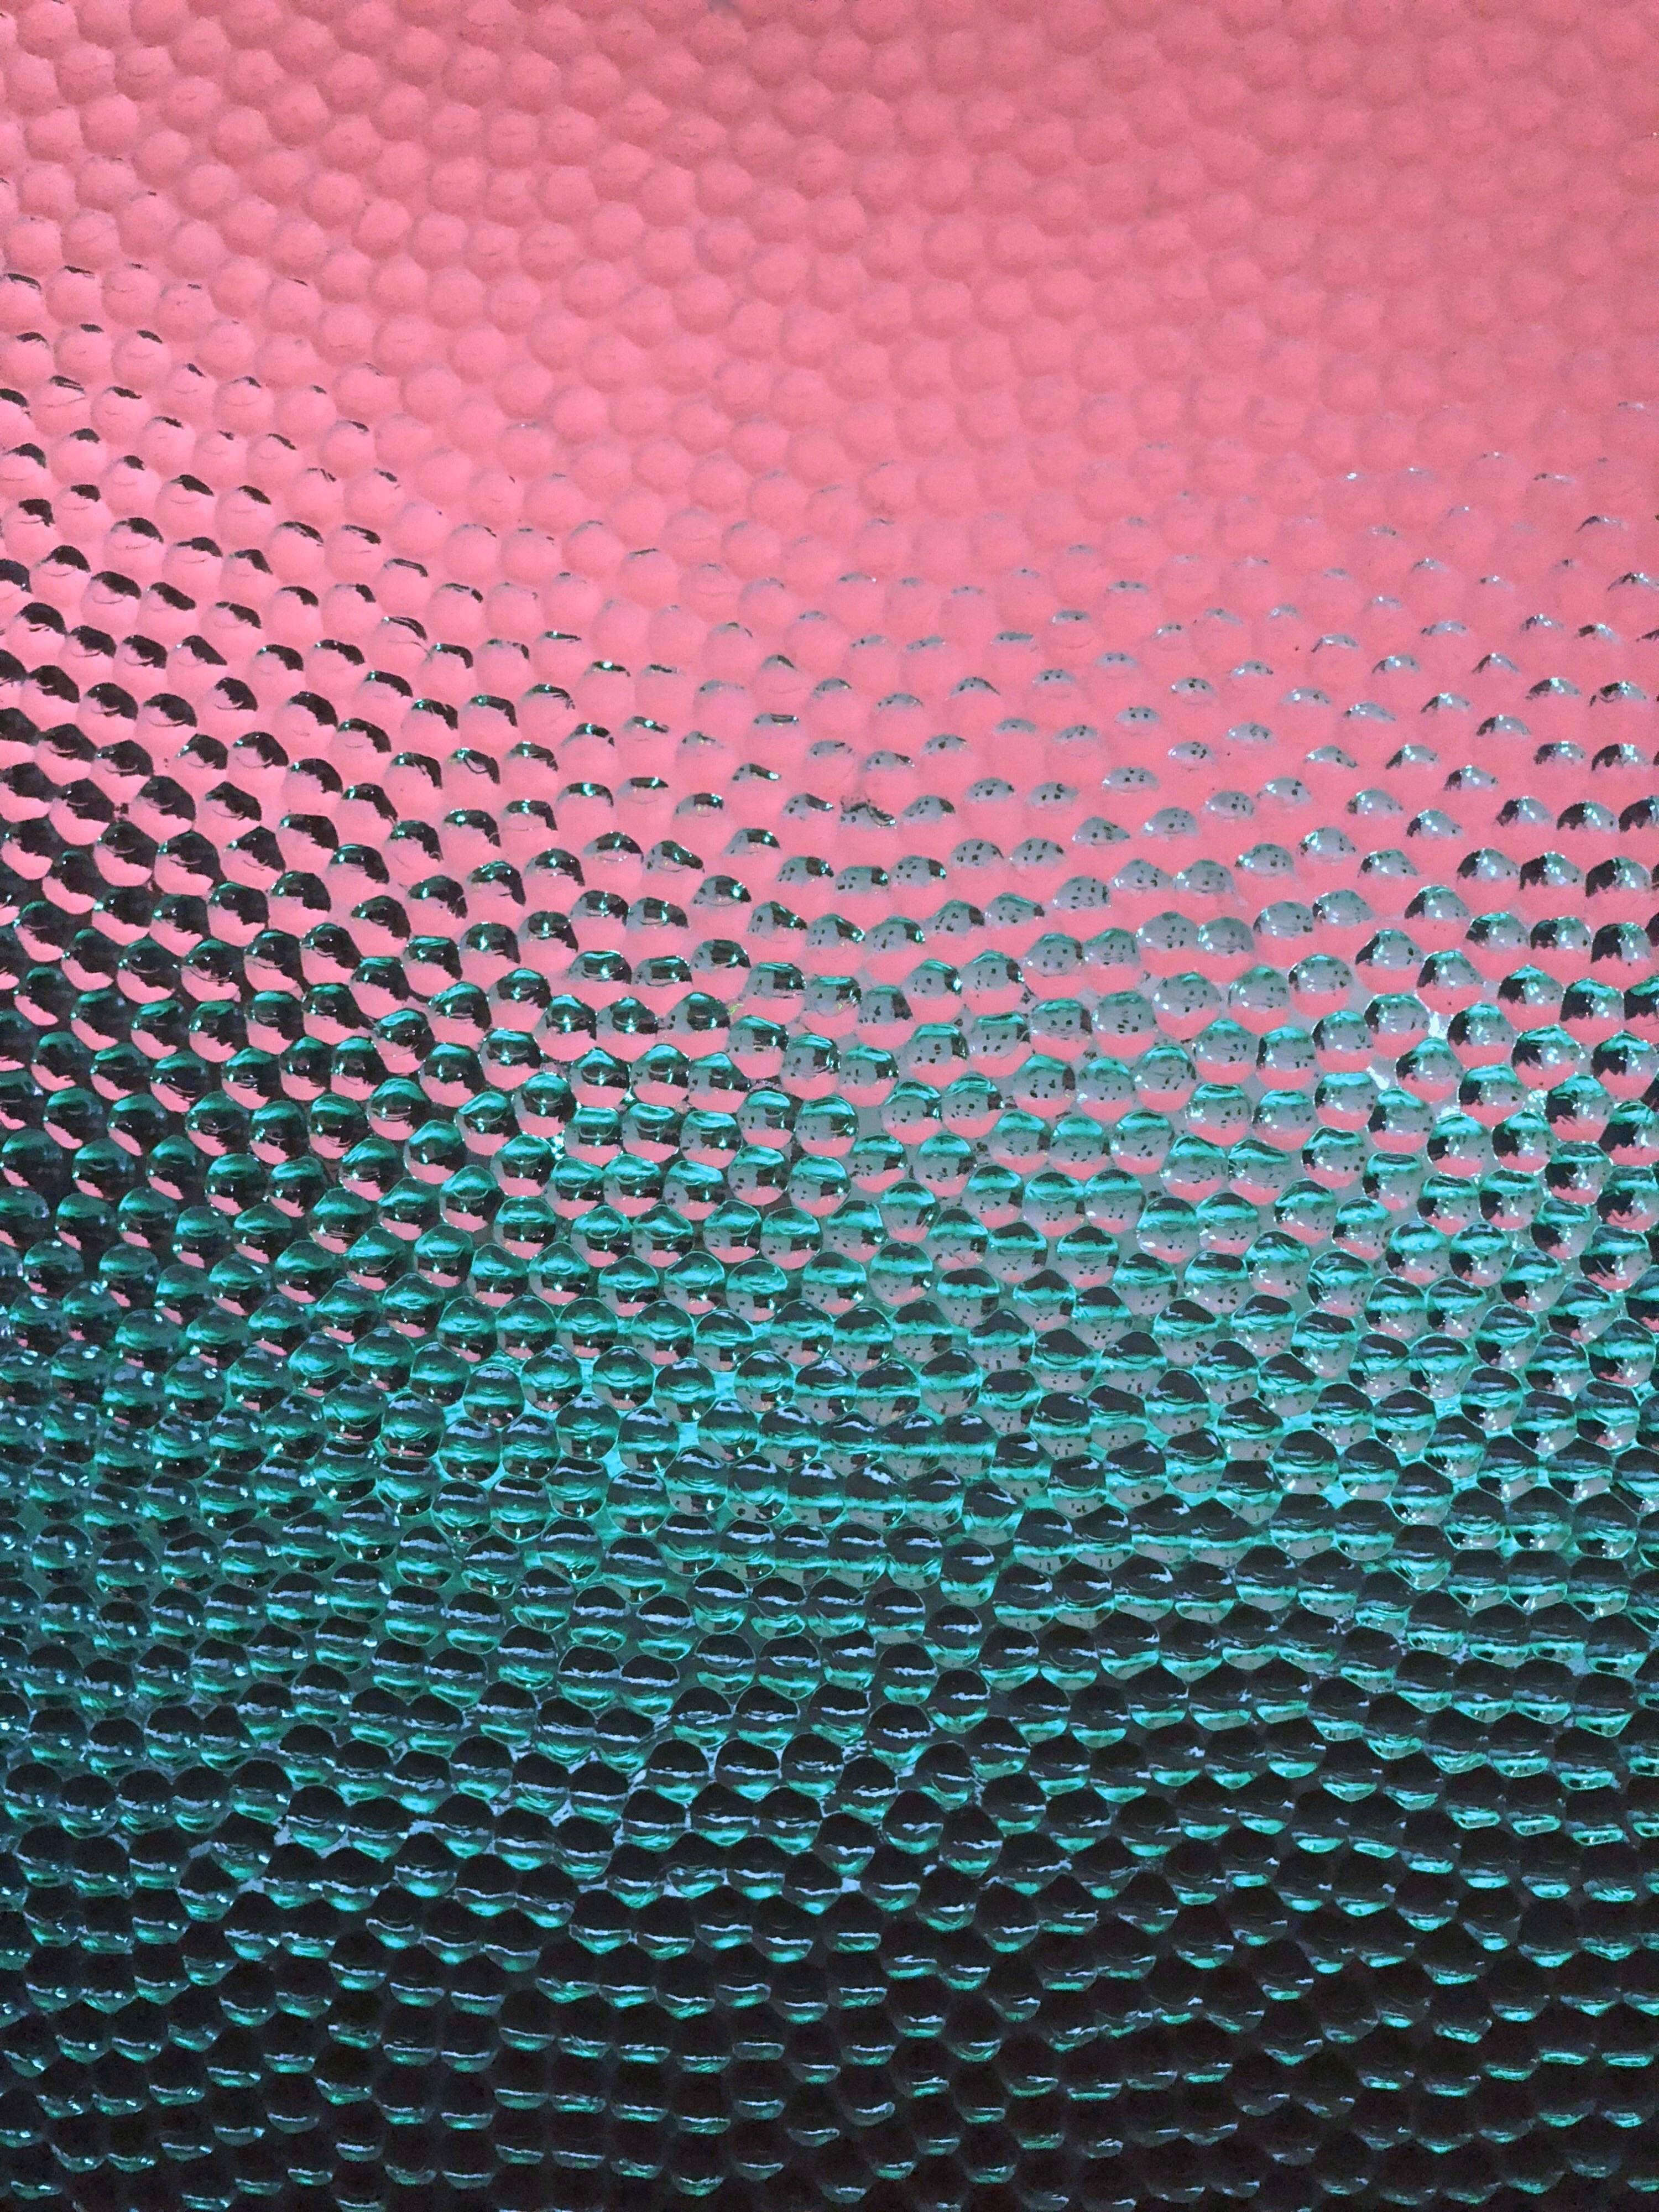 Cool Satisfying Wallpapers